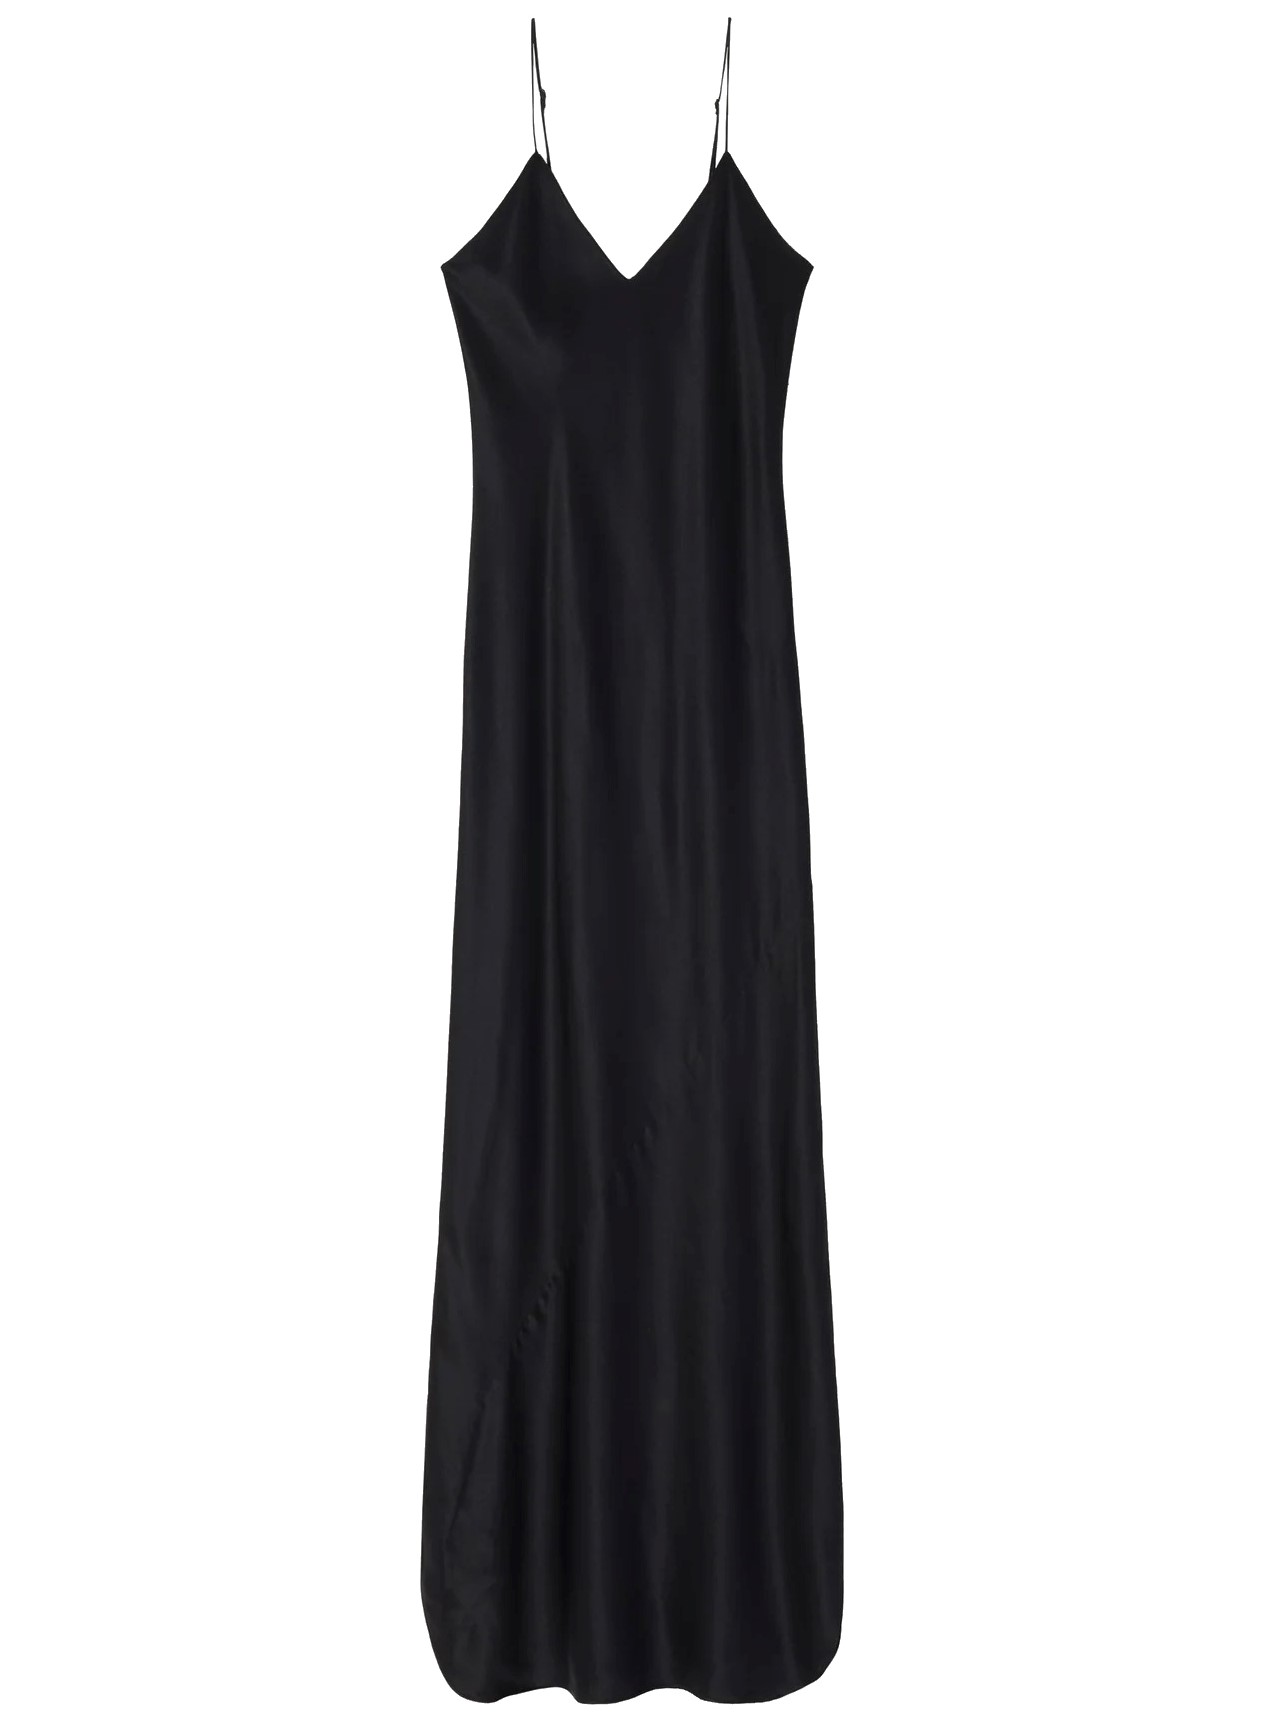 NILI LOTAN Cami Gown Dress in Black